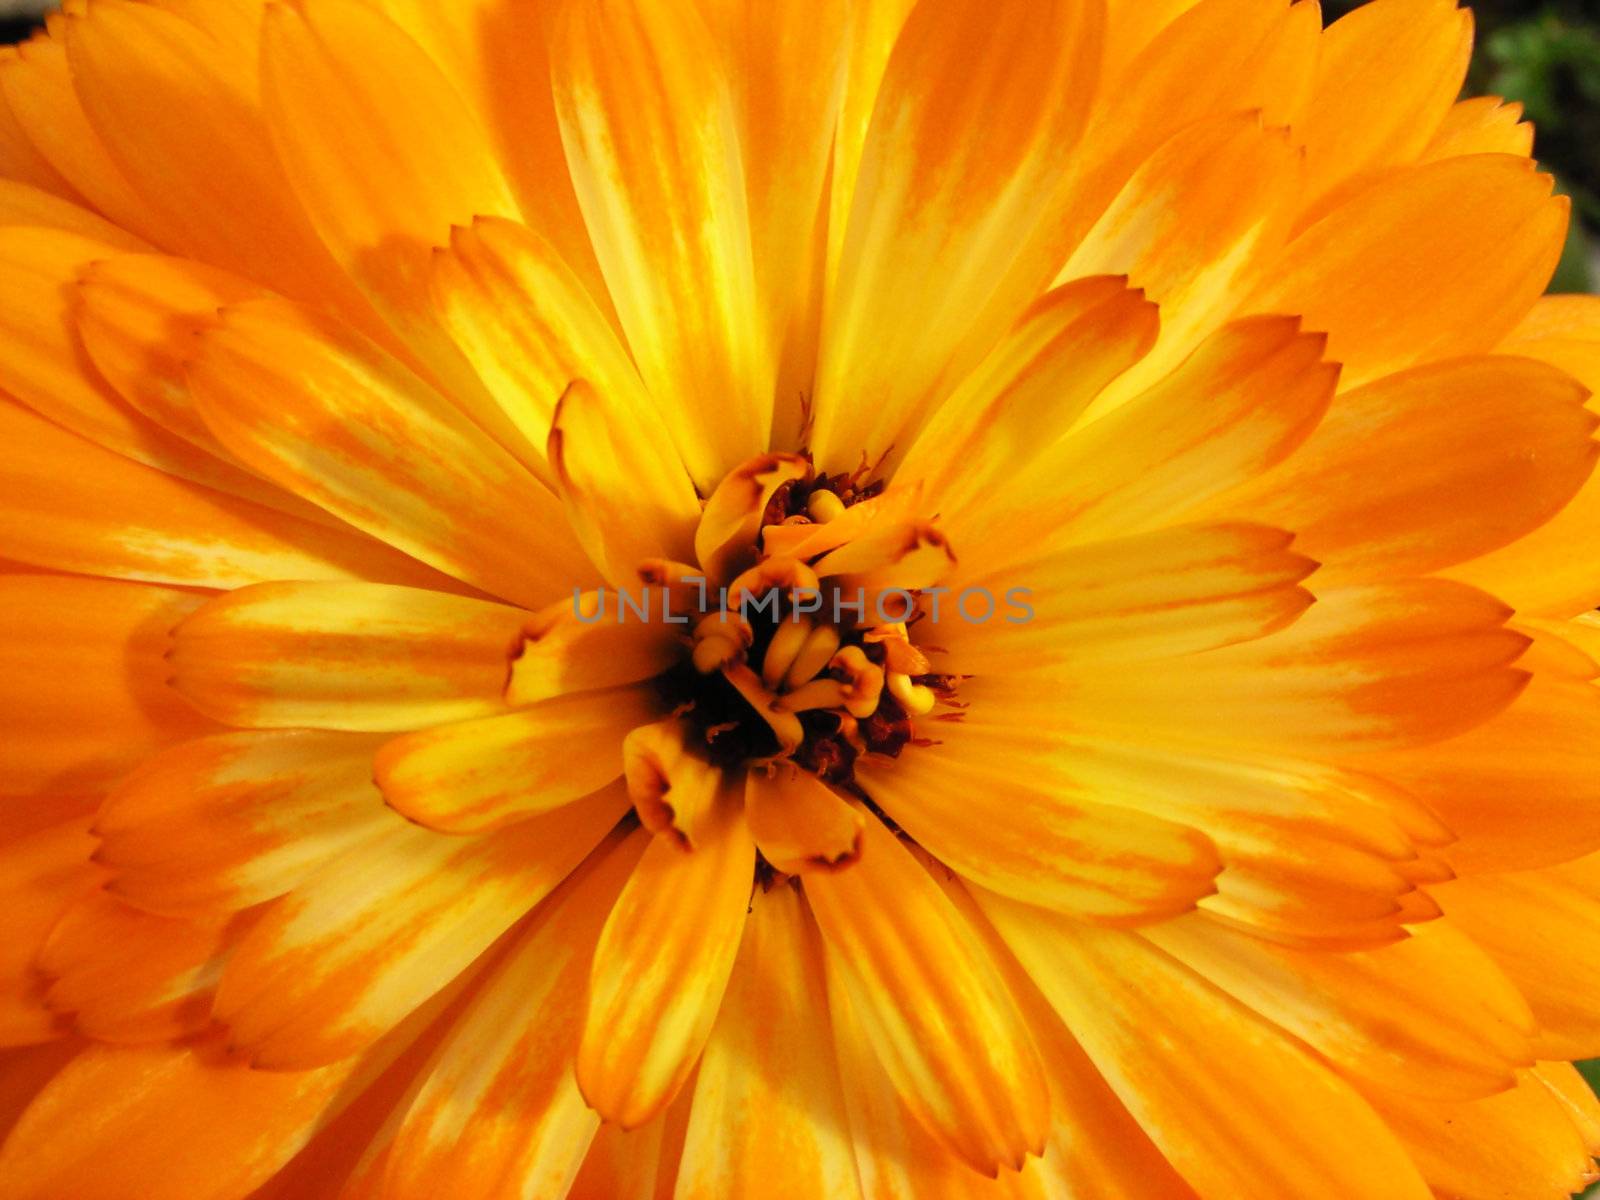 Centre of the orange flower